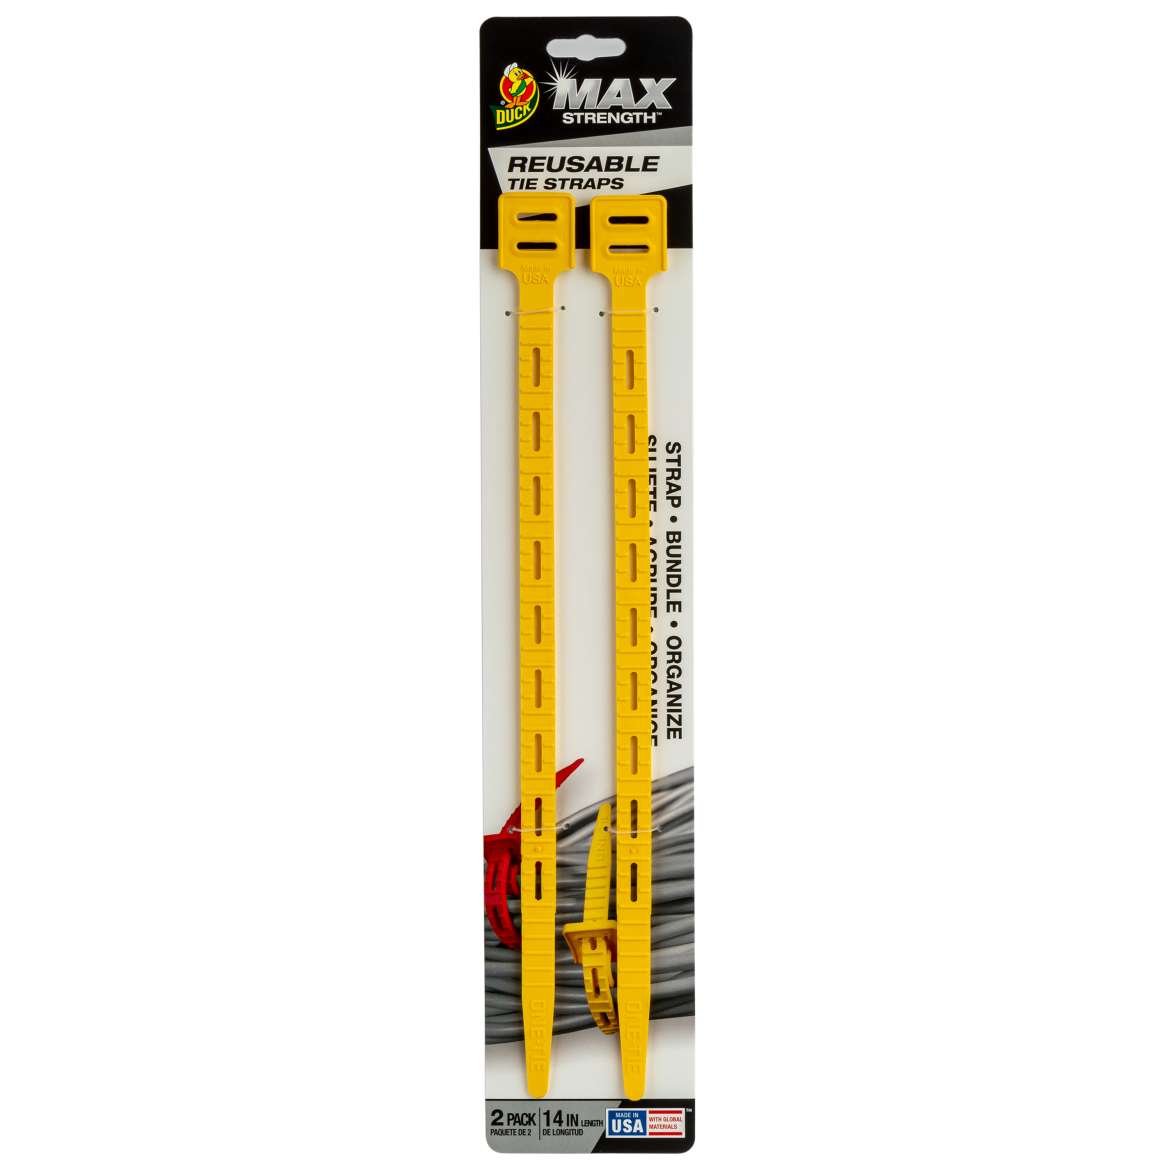 Duck Max Strength™ Reusable Tie Straps - Yellow, 2 pk, 14 in.